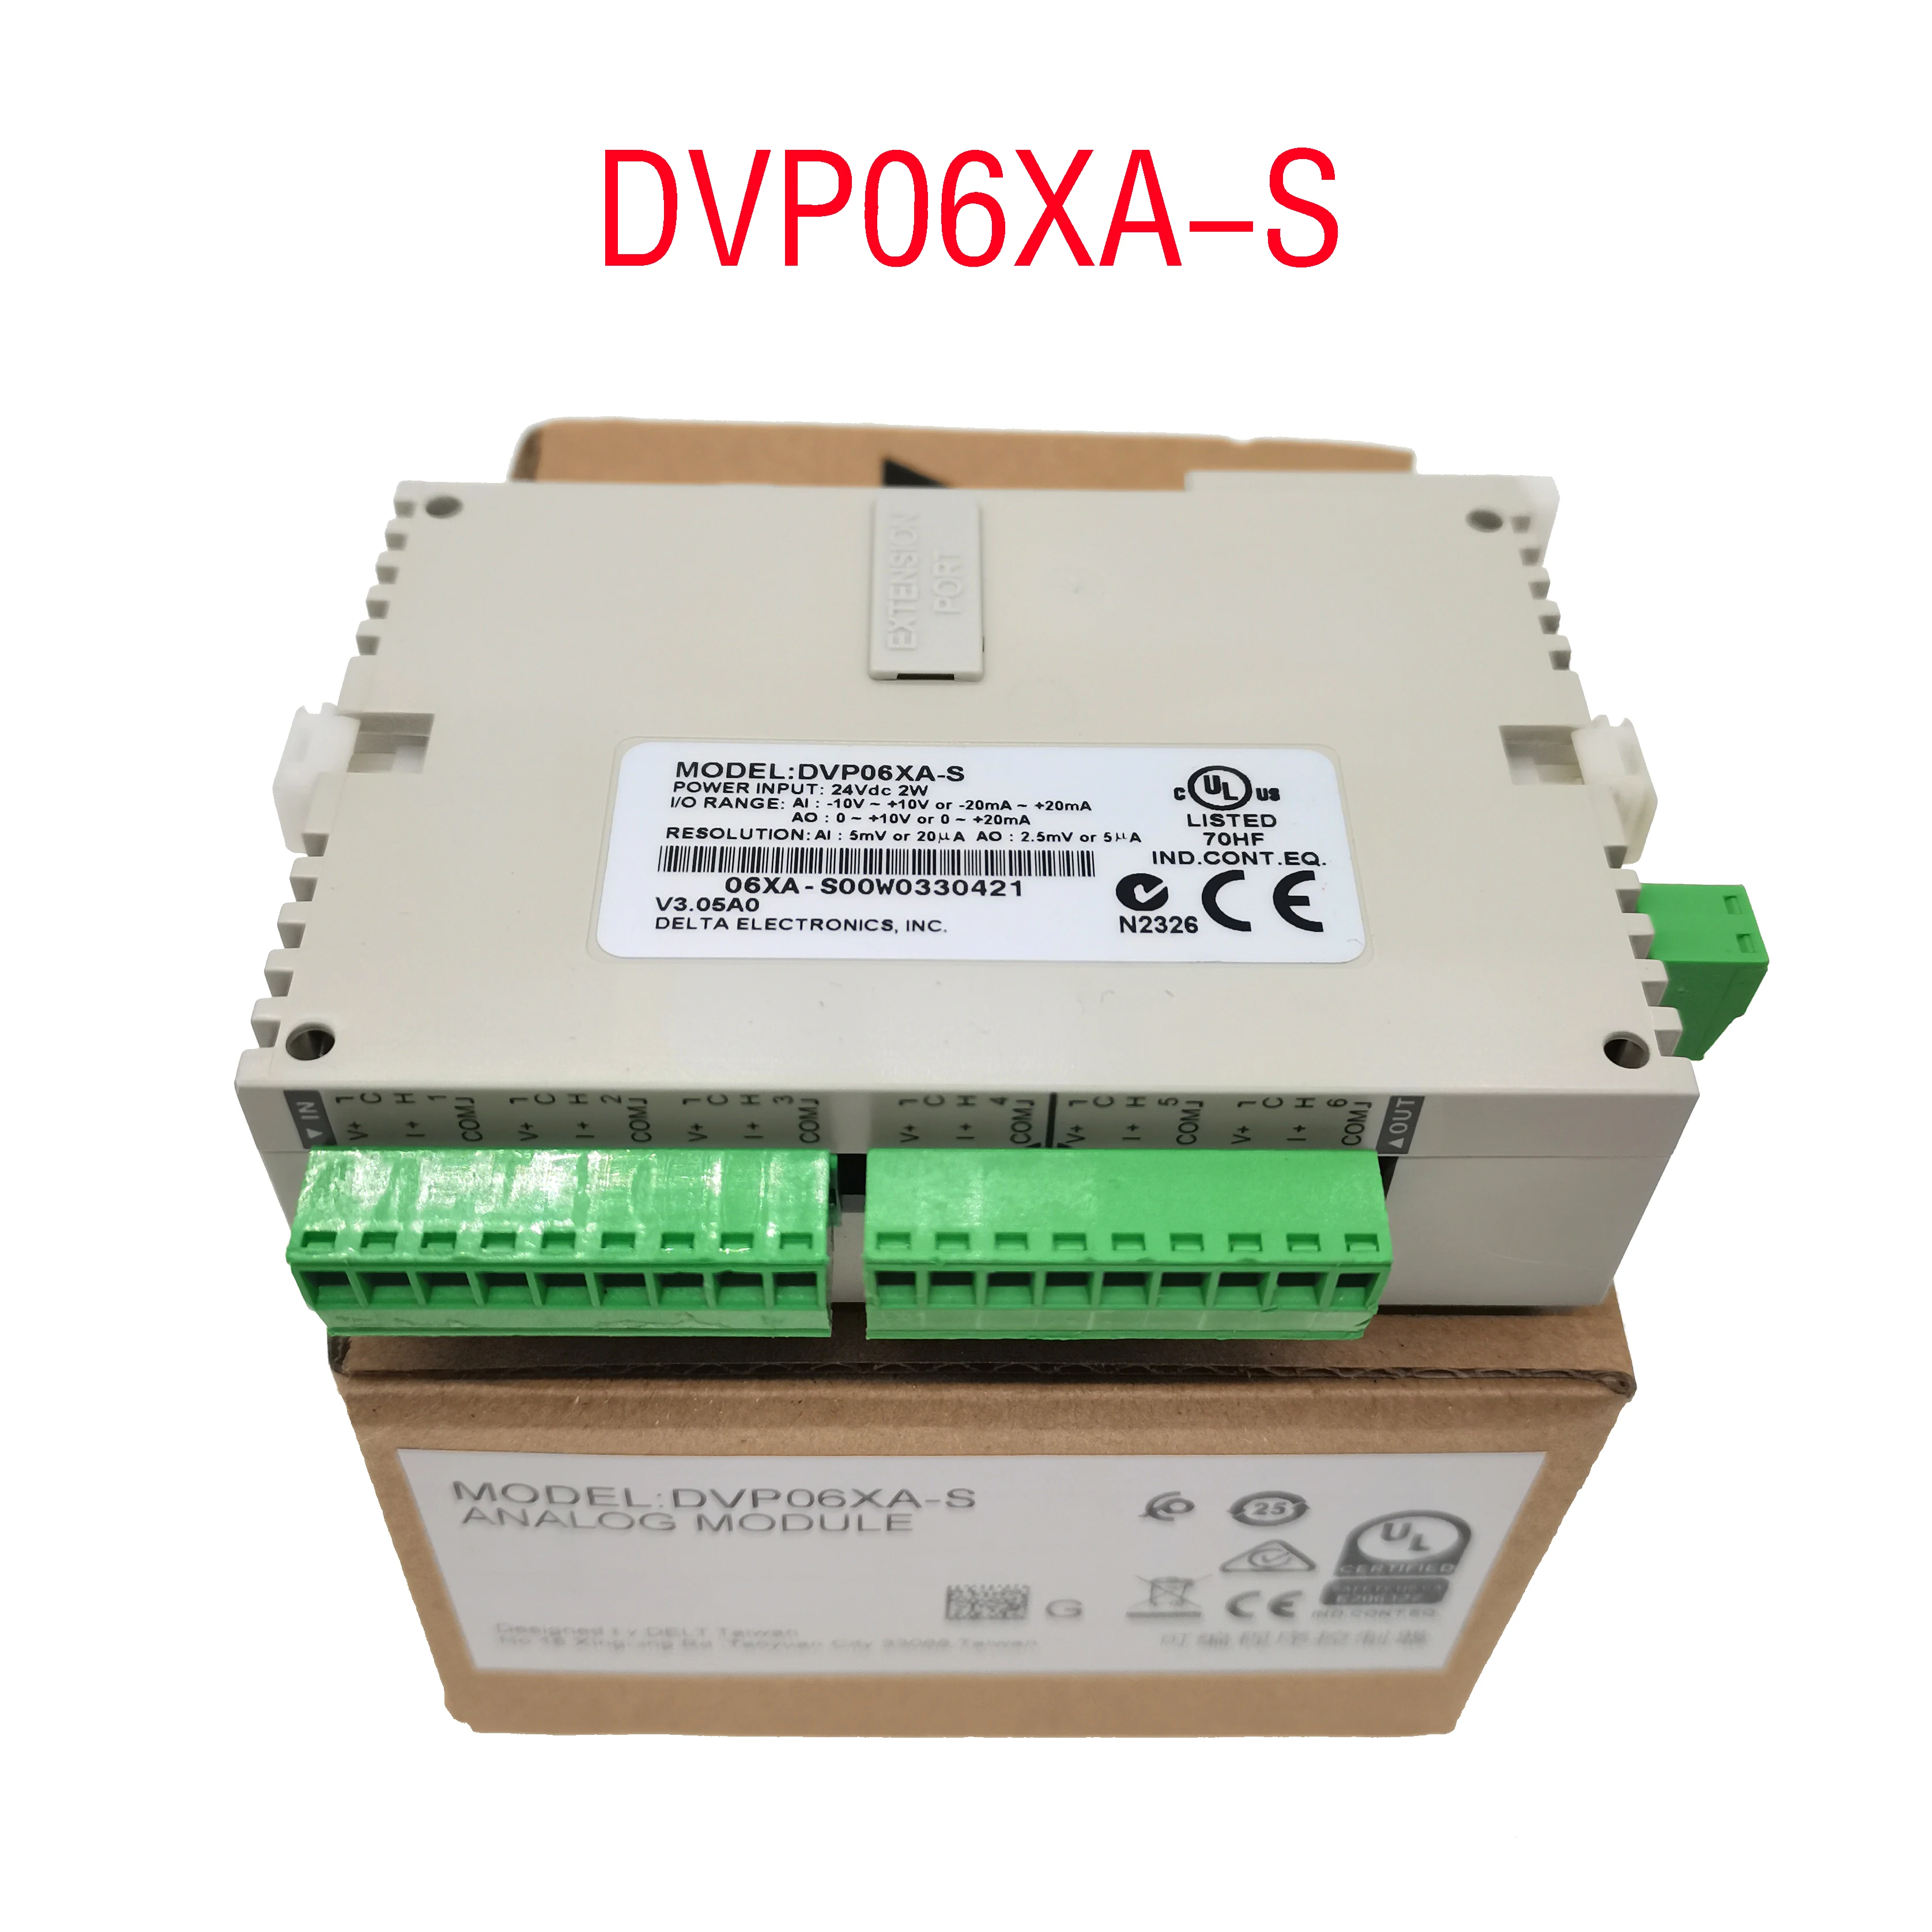 

New Original Programmable Controller resolution Analog I/O Module 4AI 2AO DC 12-bit DVP06XA-S